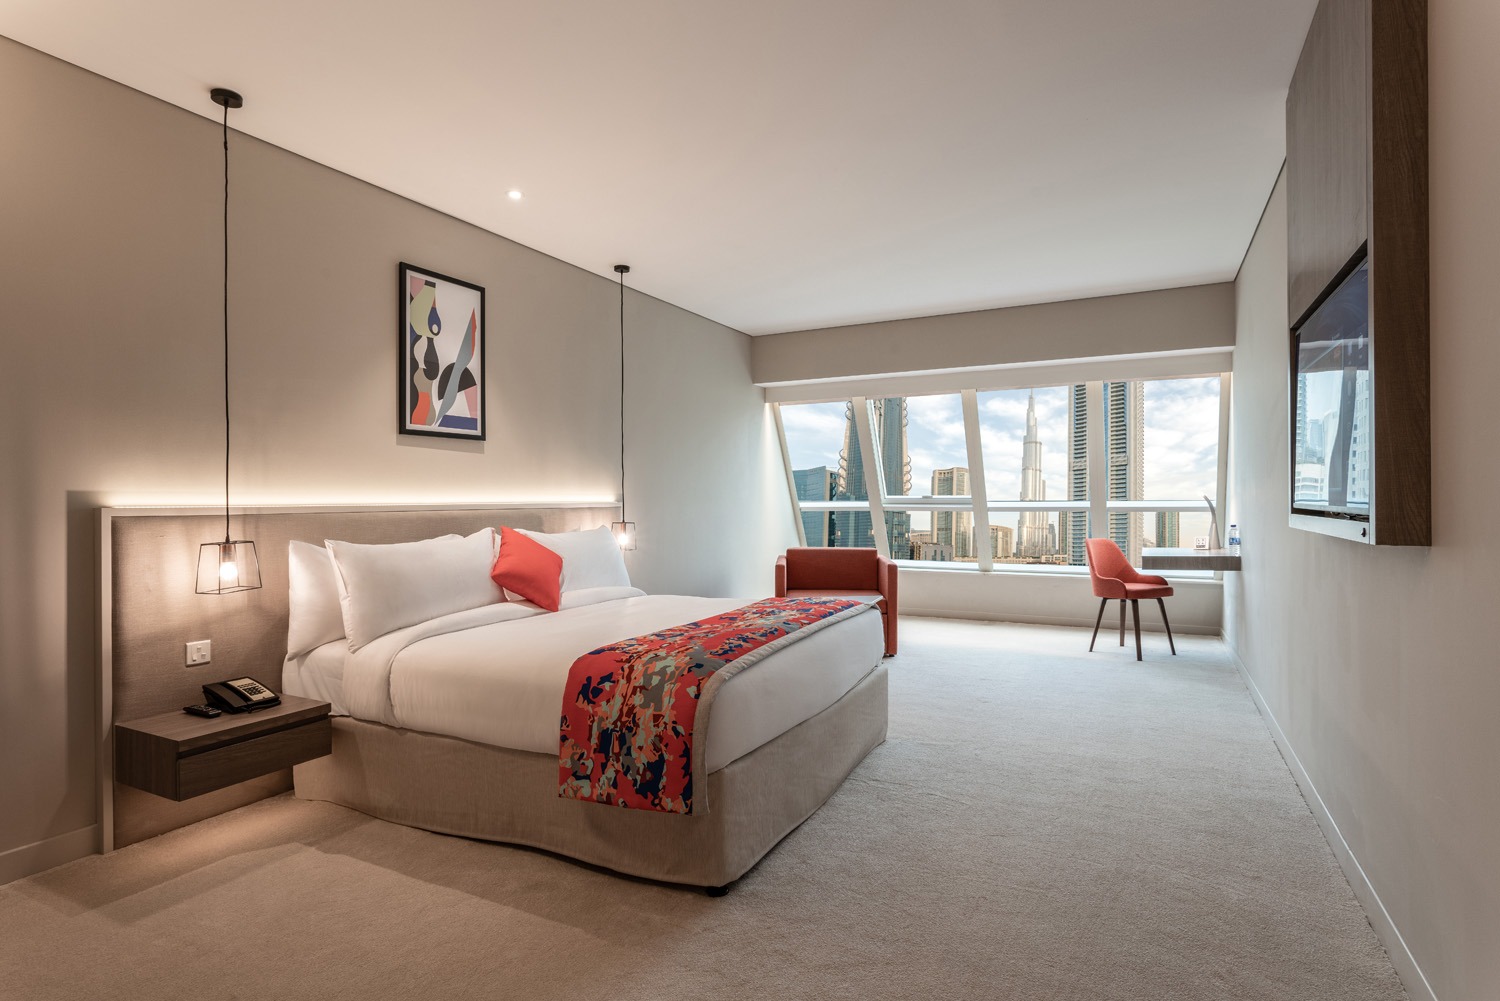 Leva Hotel Apartments Dubai opens